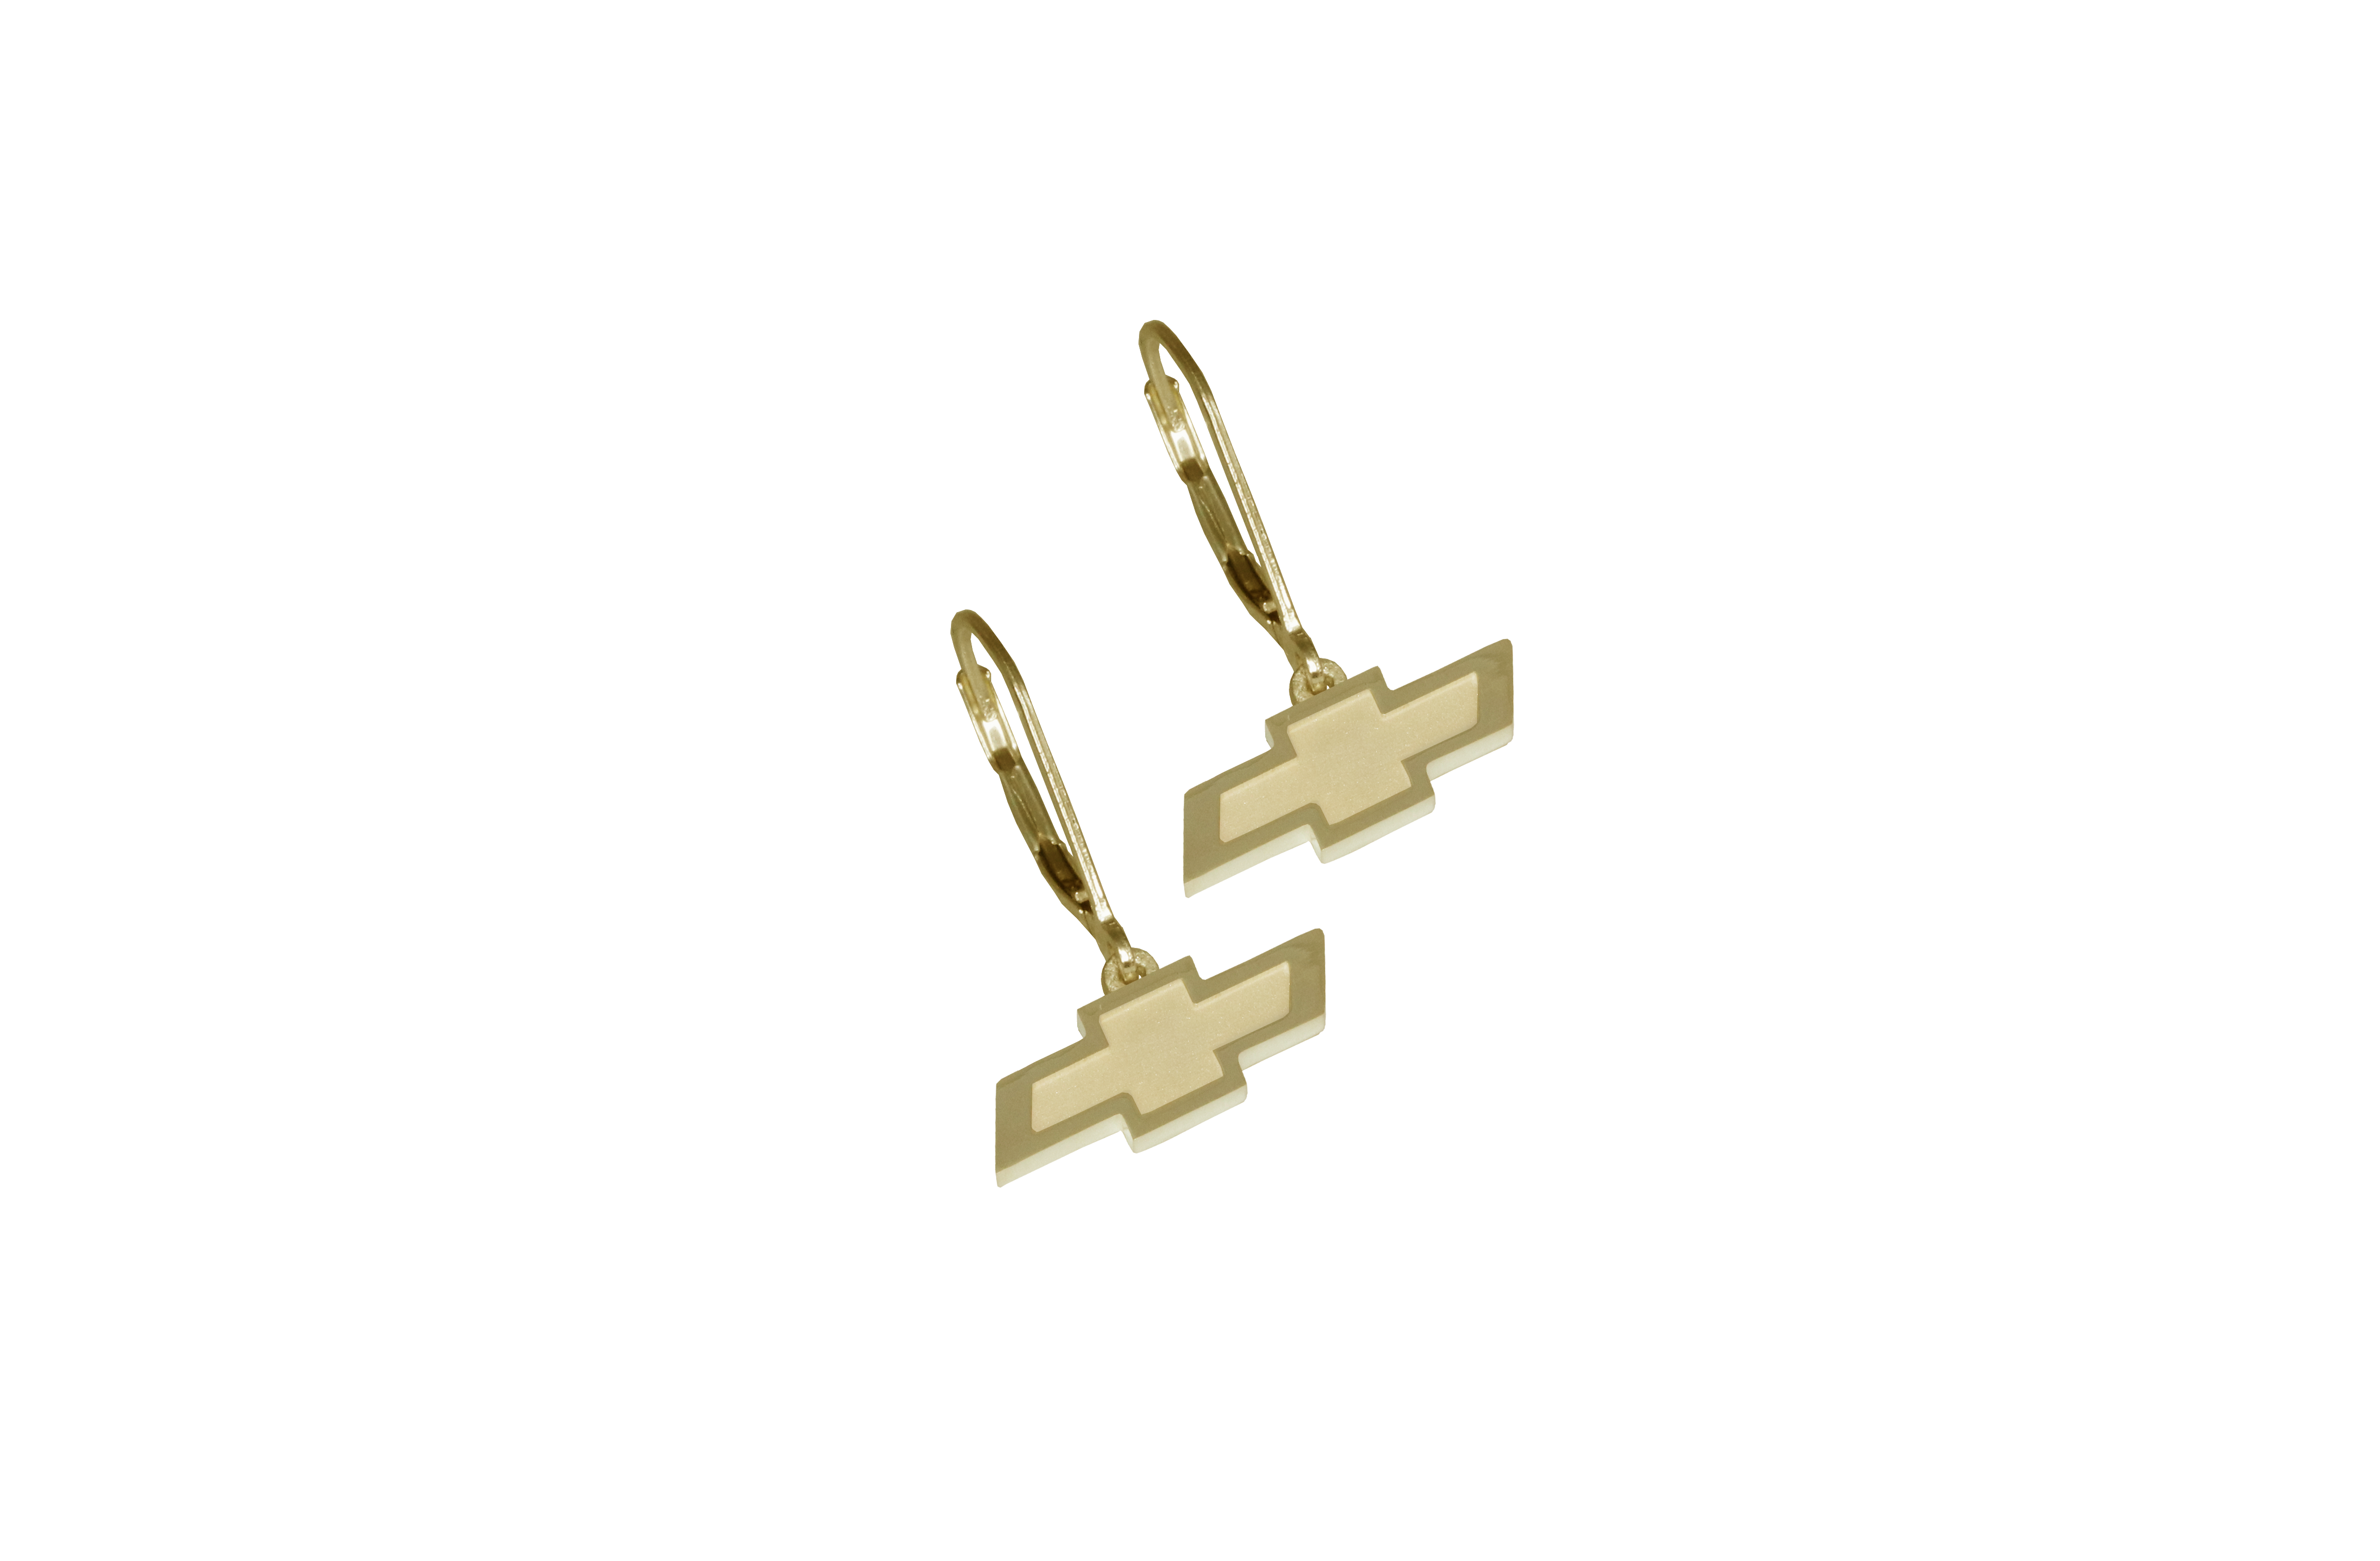 chevy-bowtie-emblem-14k-gold-1-2-leverback-earrings